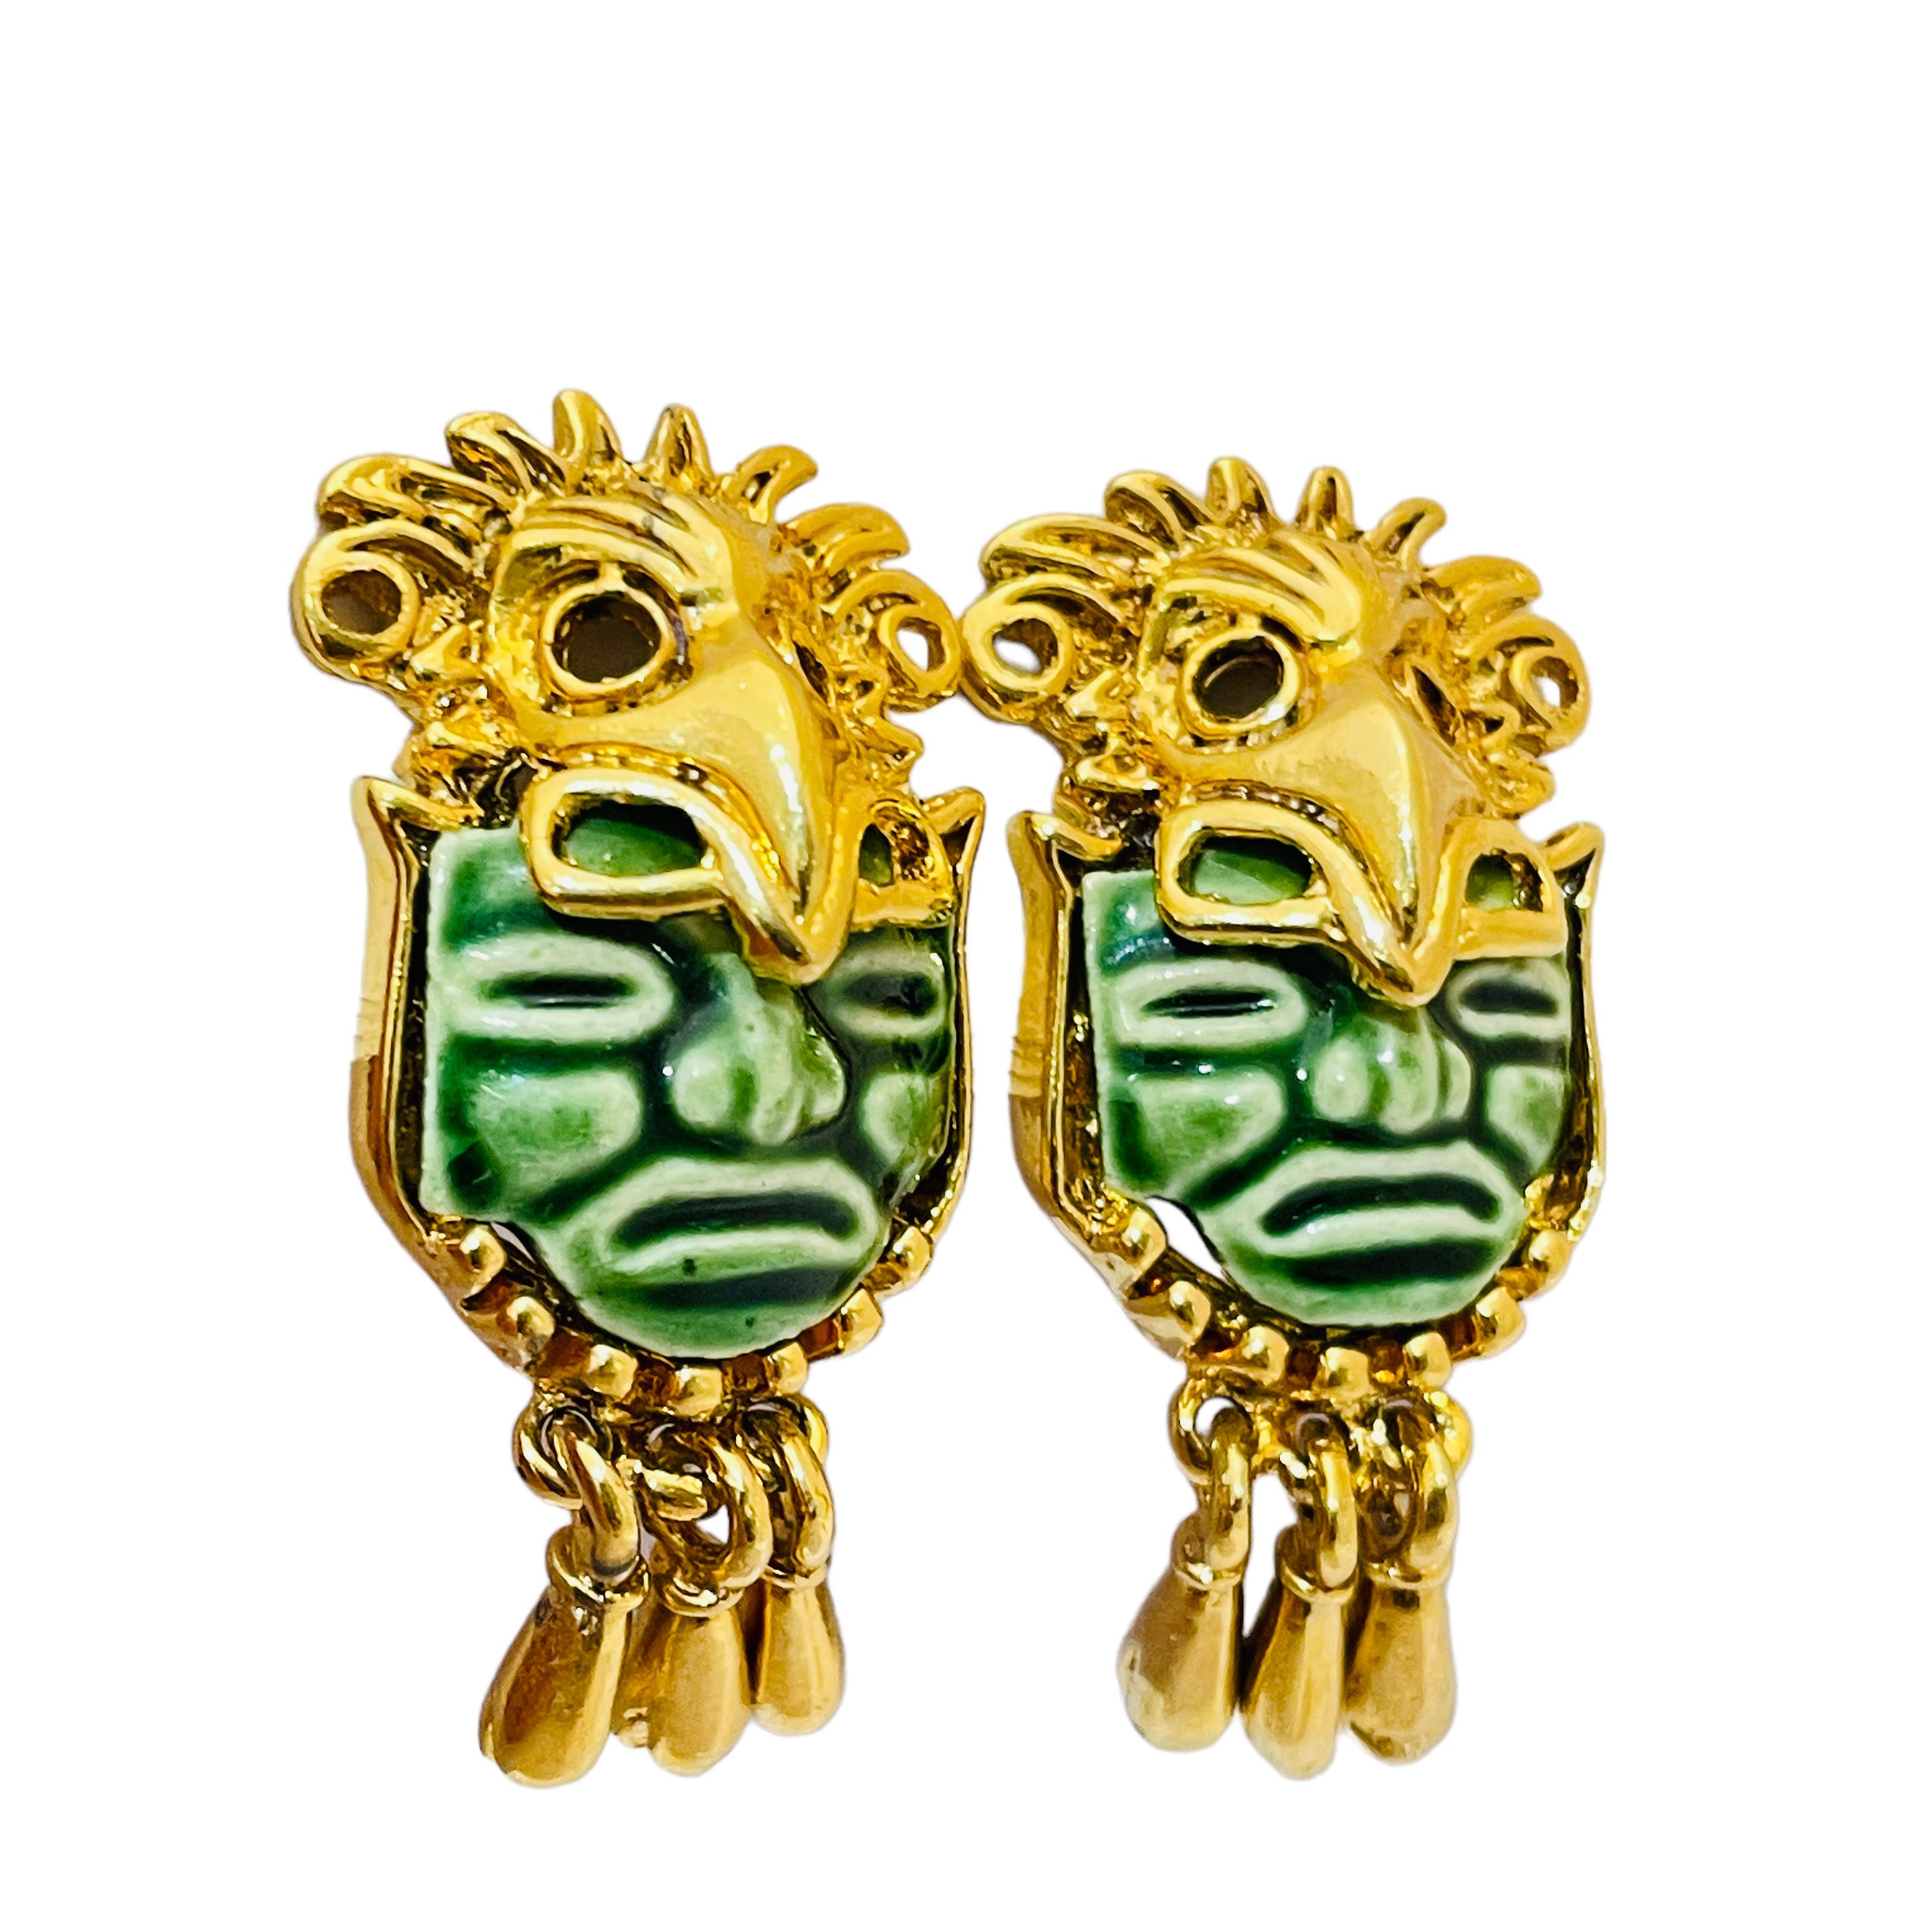 DETAILS

• signed MEXICO (designer name)

• gold tone with ceramic stone

• vintage designer clip on earrings

MEASUREMENTS

• 1.5